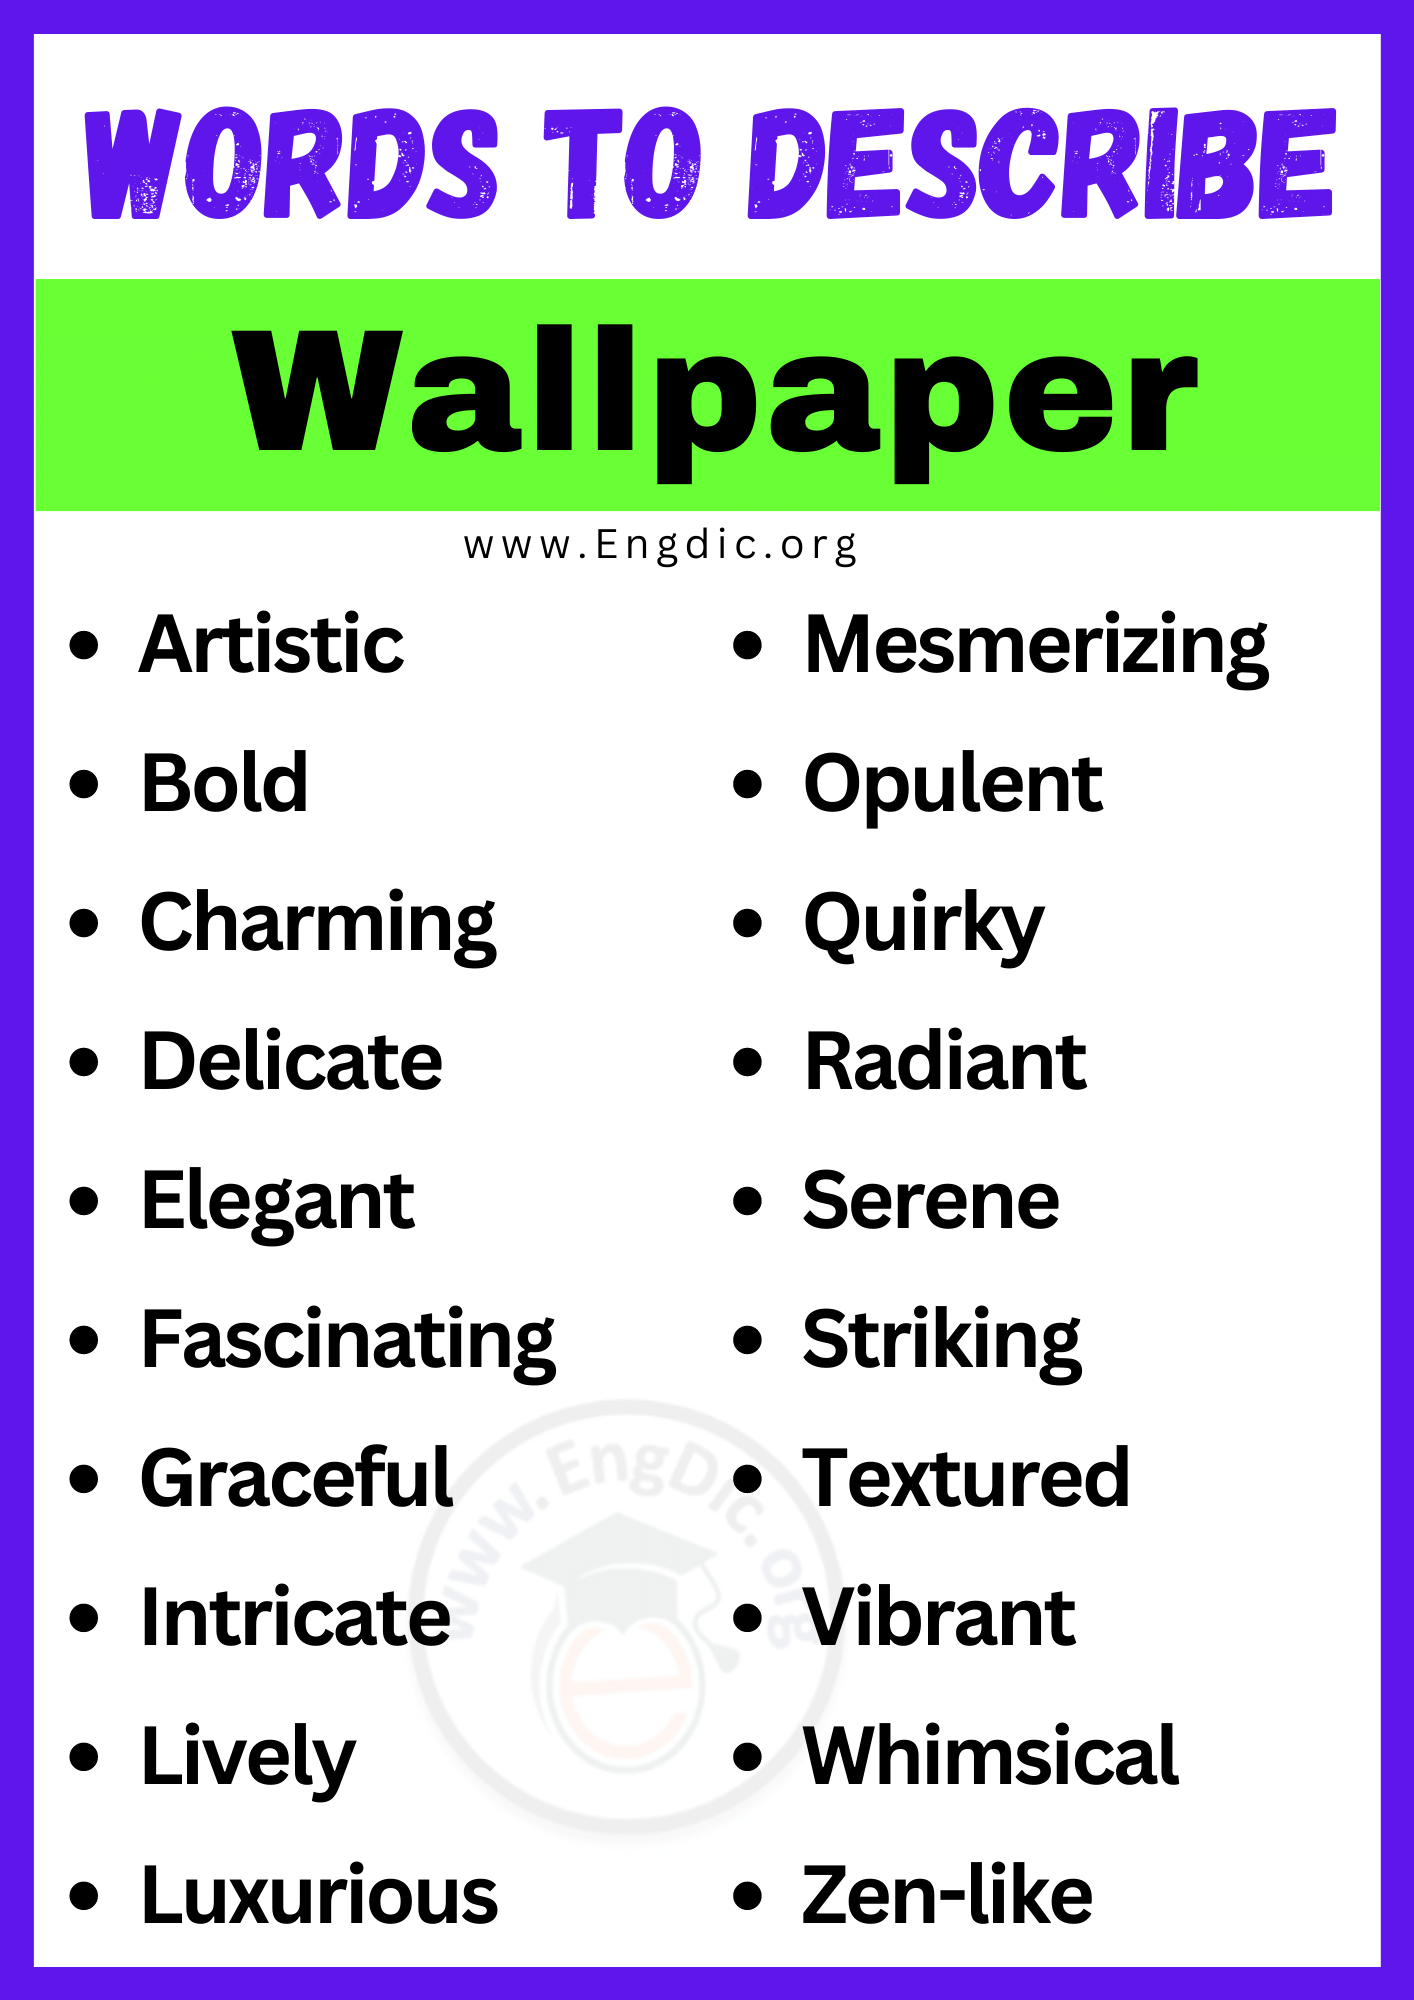 Words to Describe Wallpaper